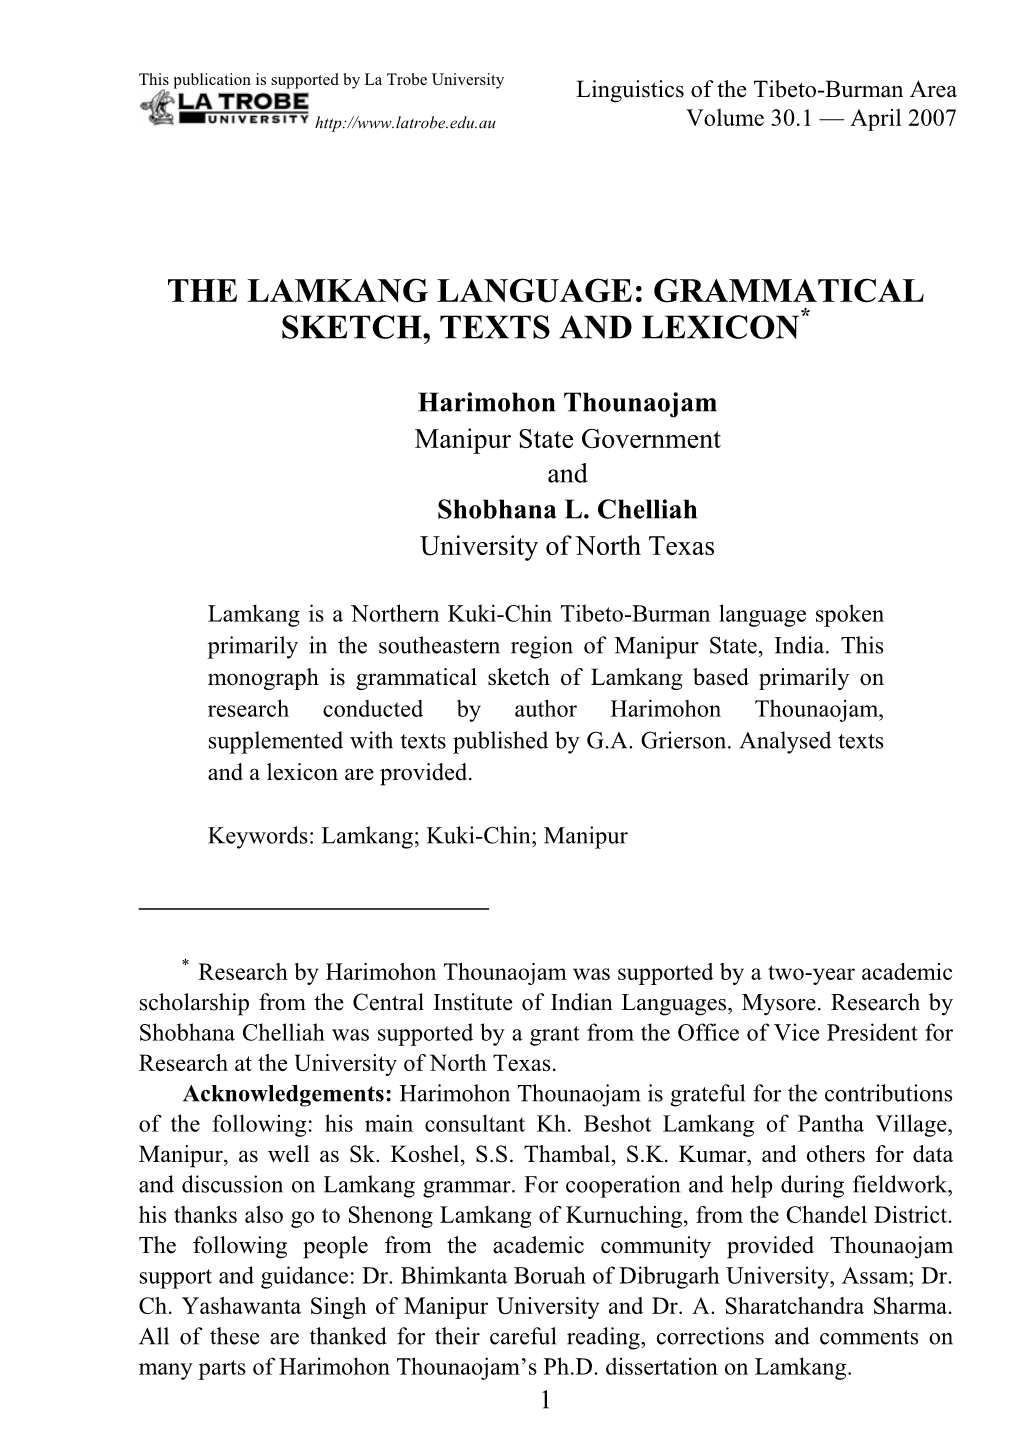 The Lamkang Language: Grammatical Sketch, Texts and Lexicon*